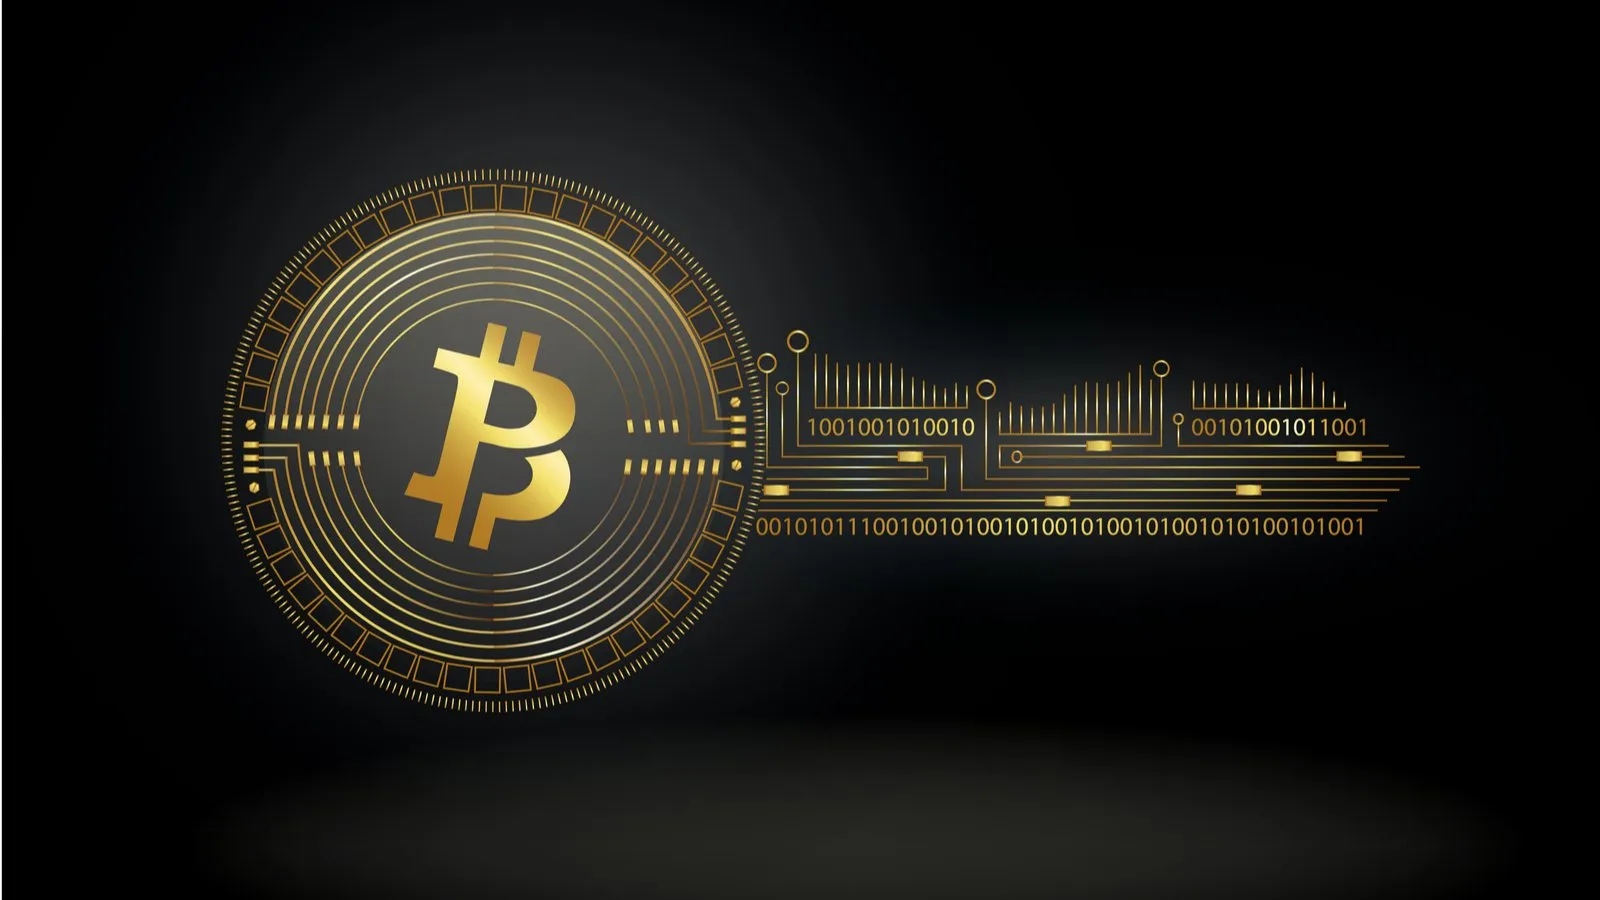 Digital image of bitcoin